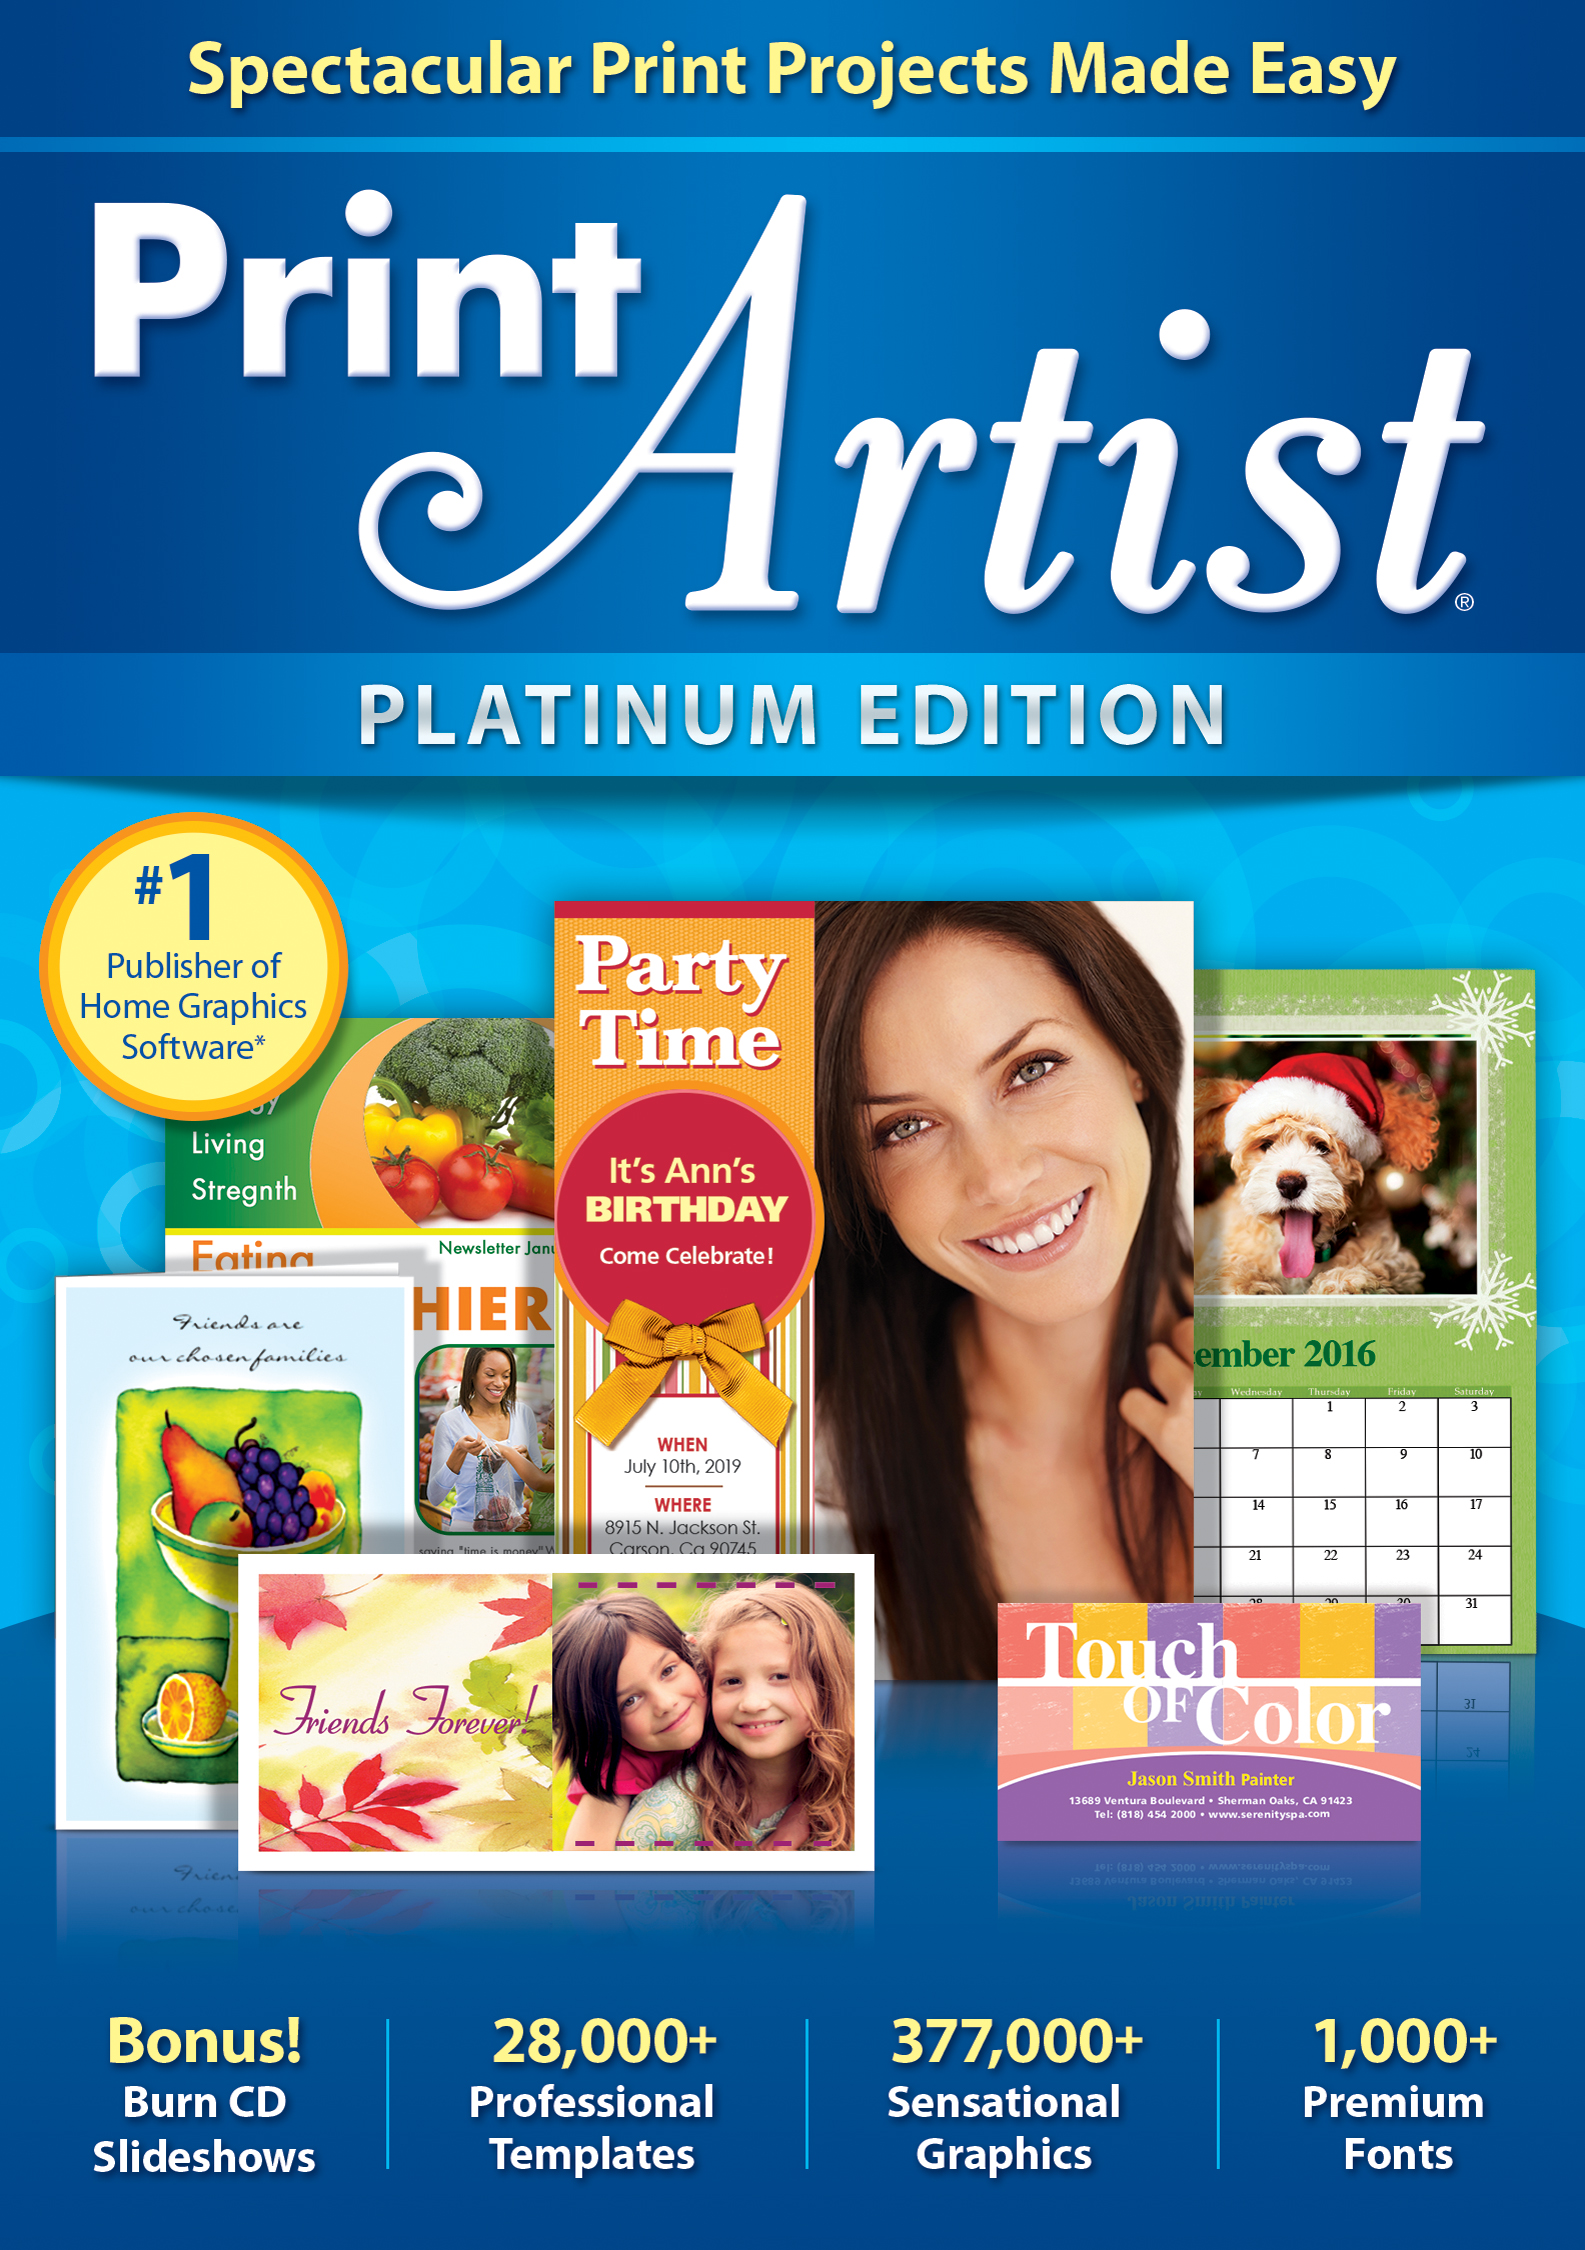 Print Artist 25 Platinum [Download]